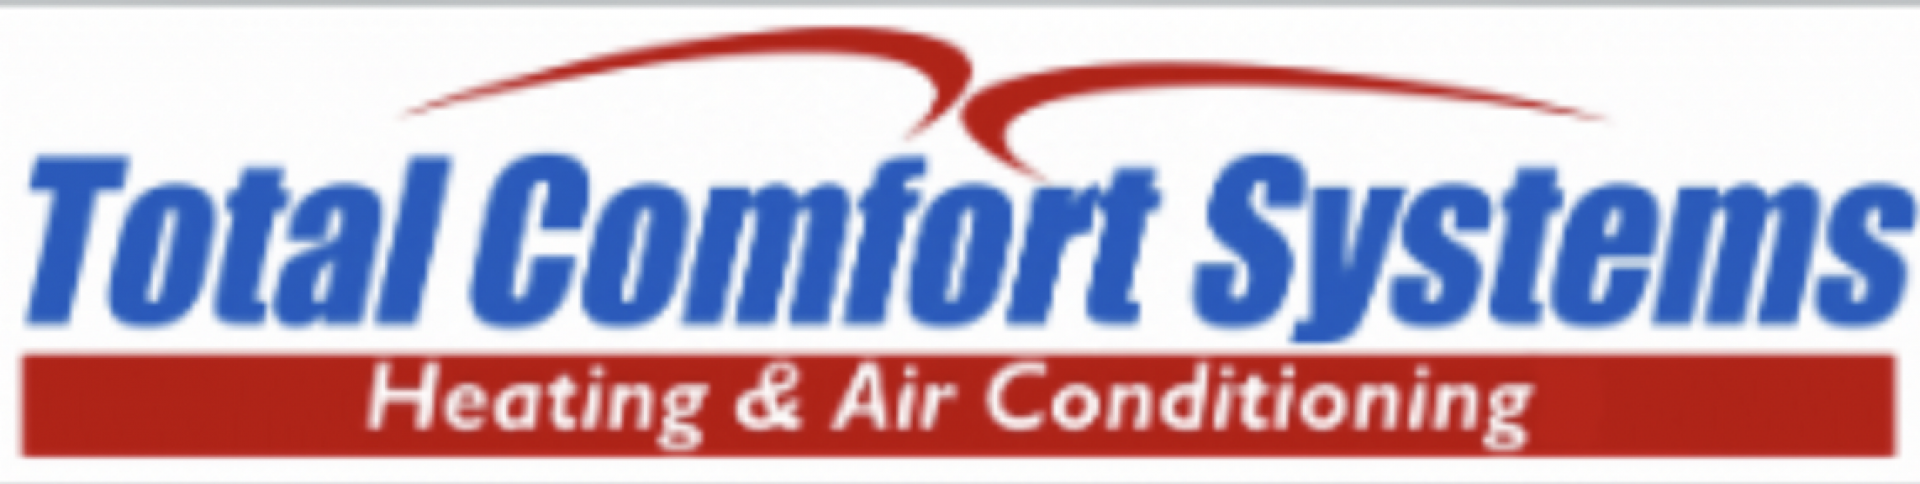 Total Comfort Systems HVAC company logo